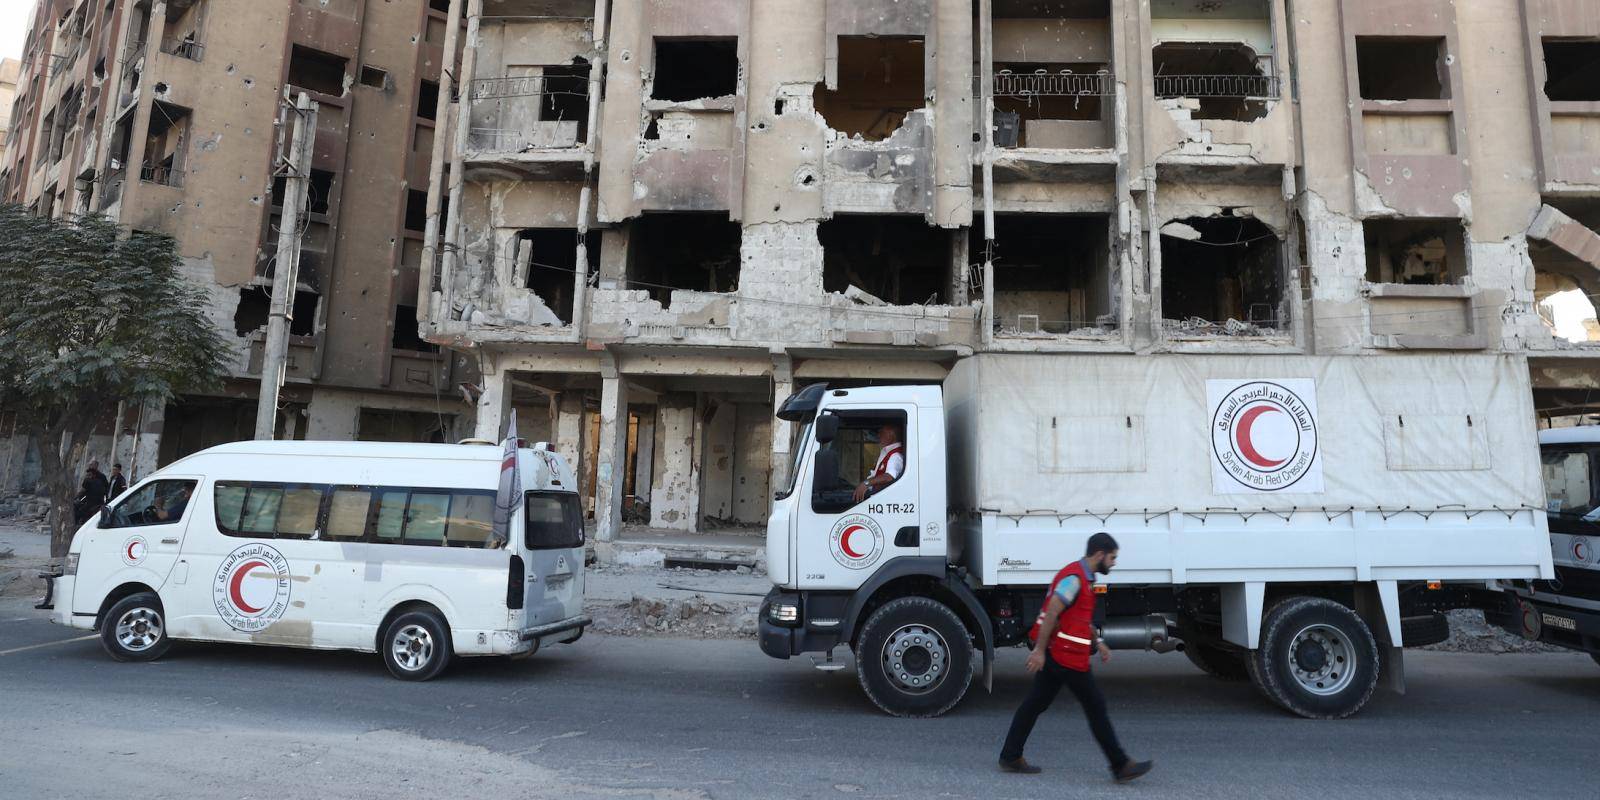 Red Crescent aid trucks drive through war-torn Syrian street